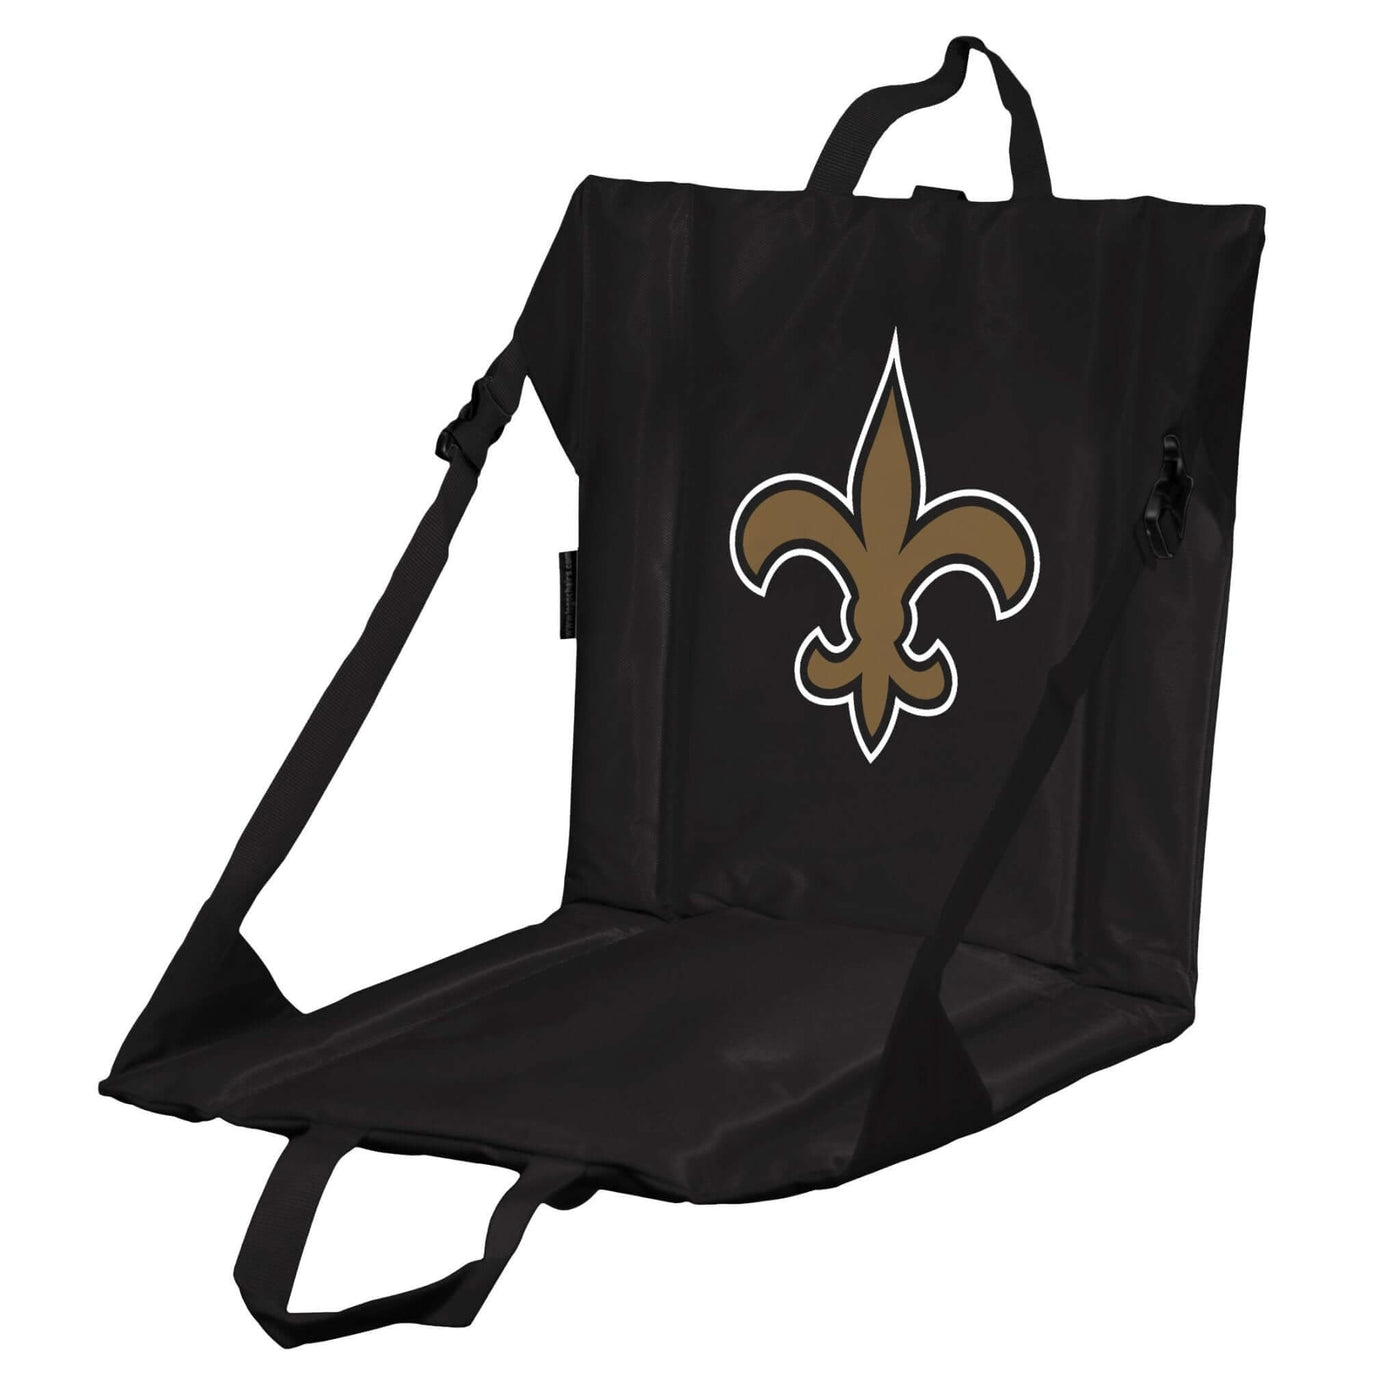 New Orleans Saints Stadium Seat - Logo Brands